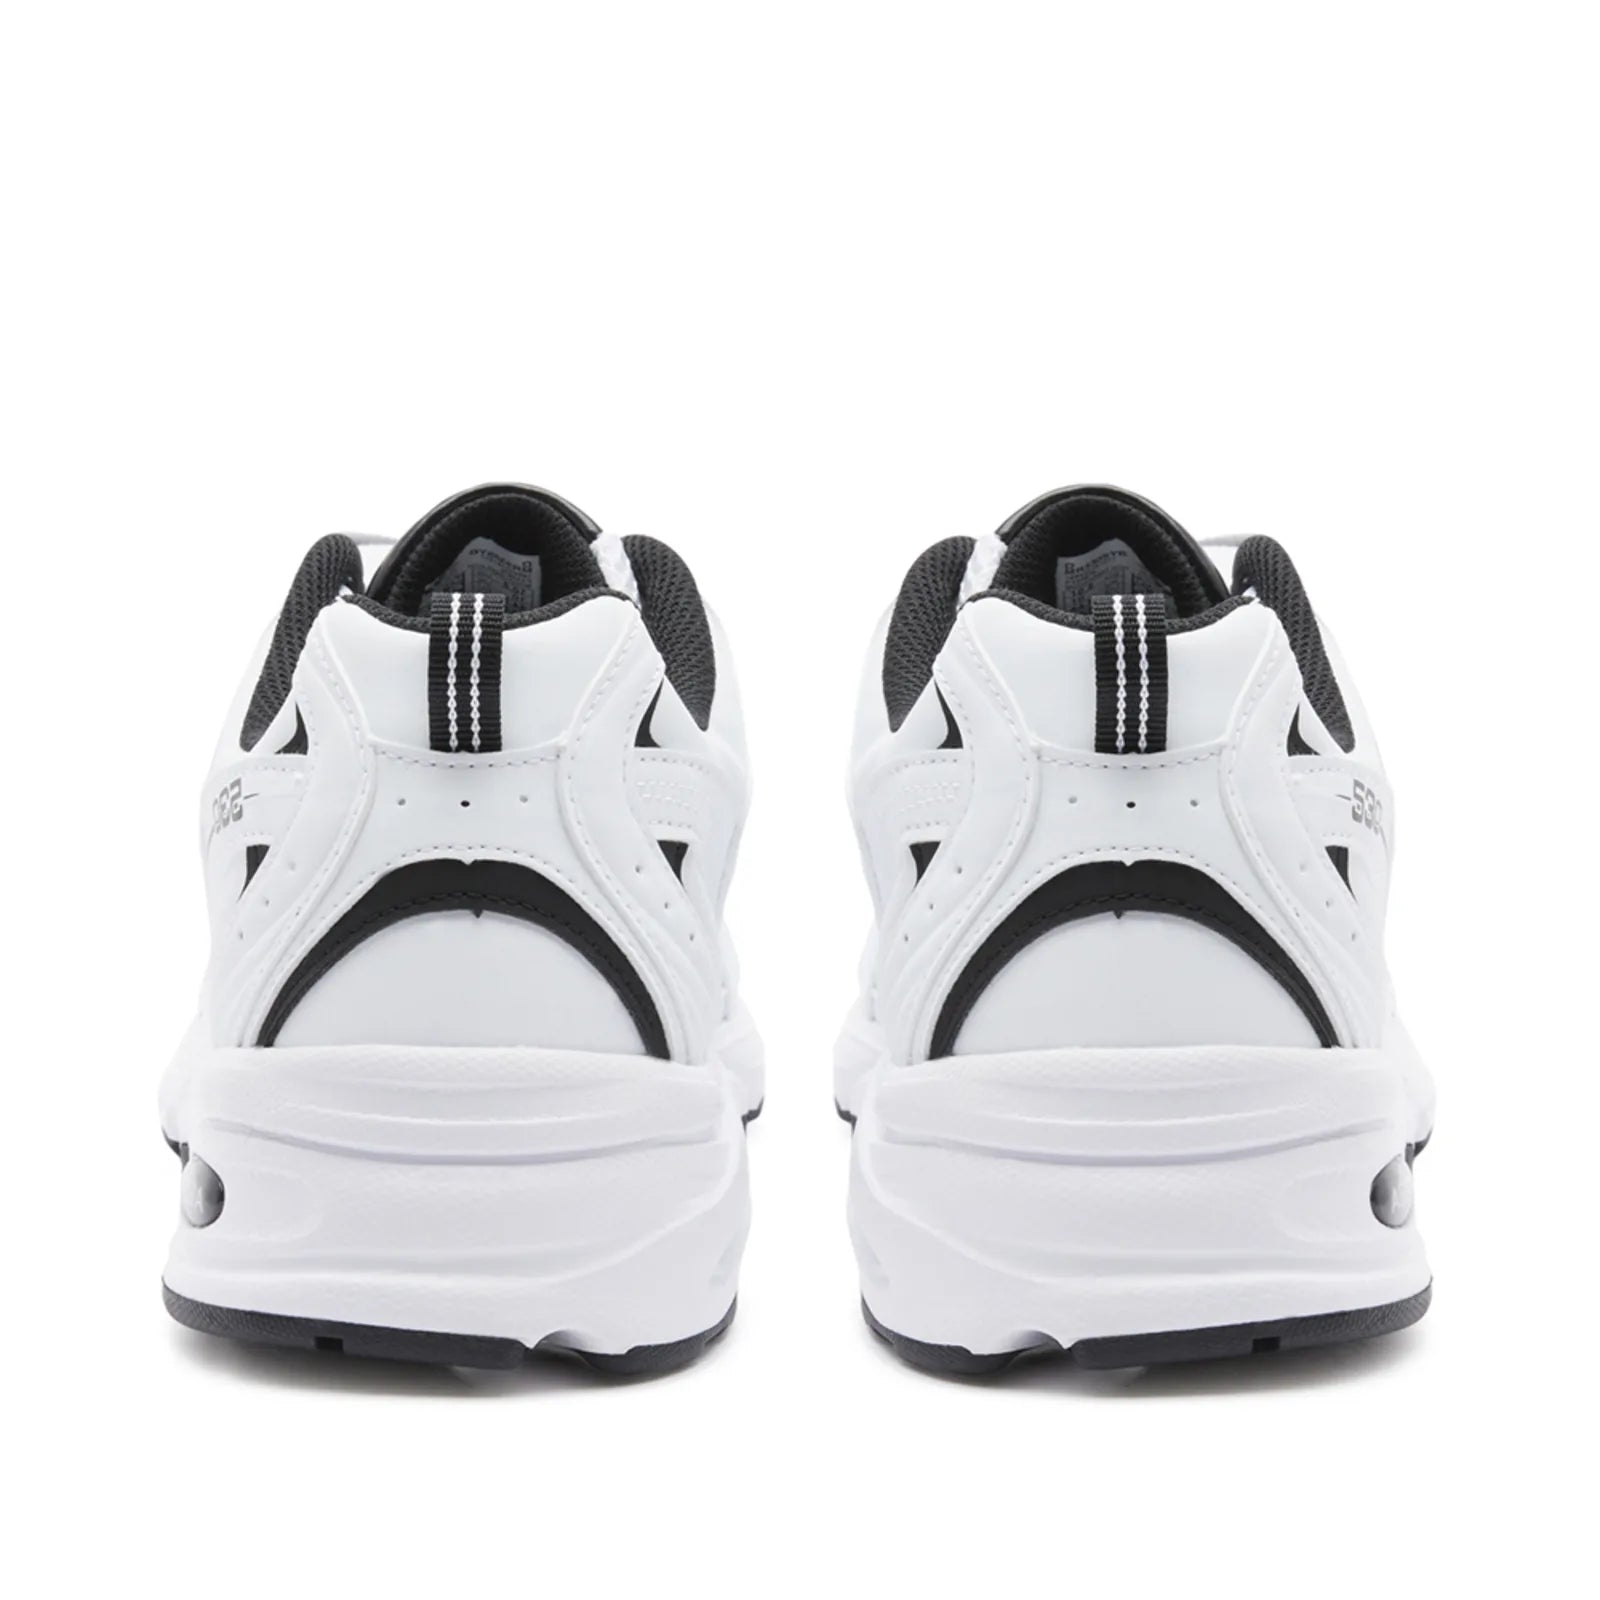 MR530SYB White Black Classic Sneakers MR530SYB - 5